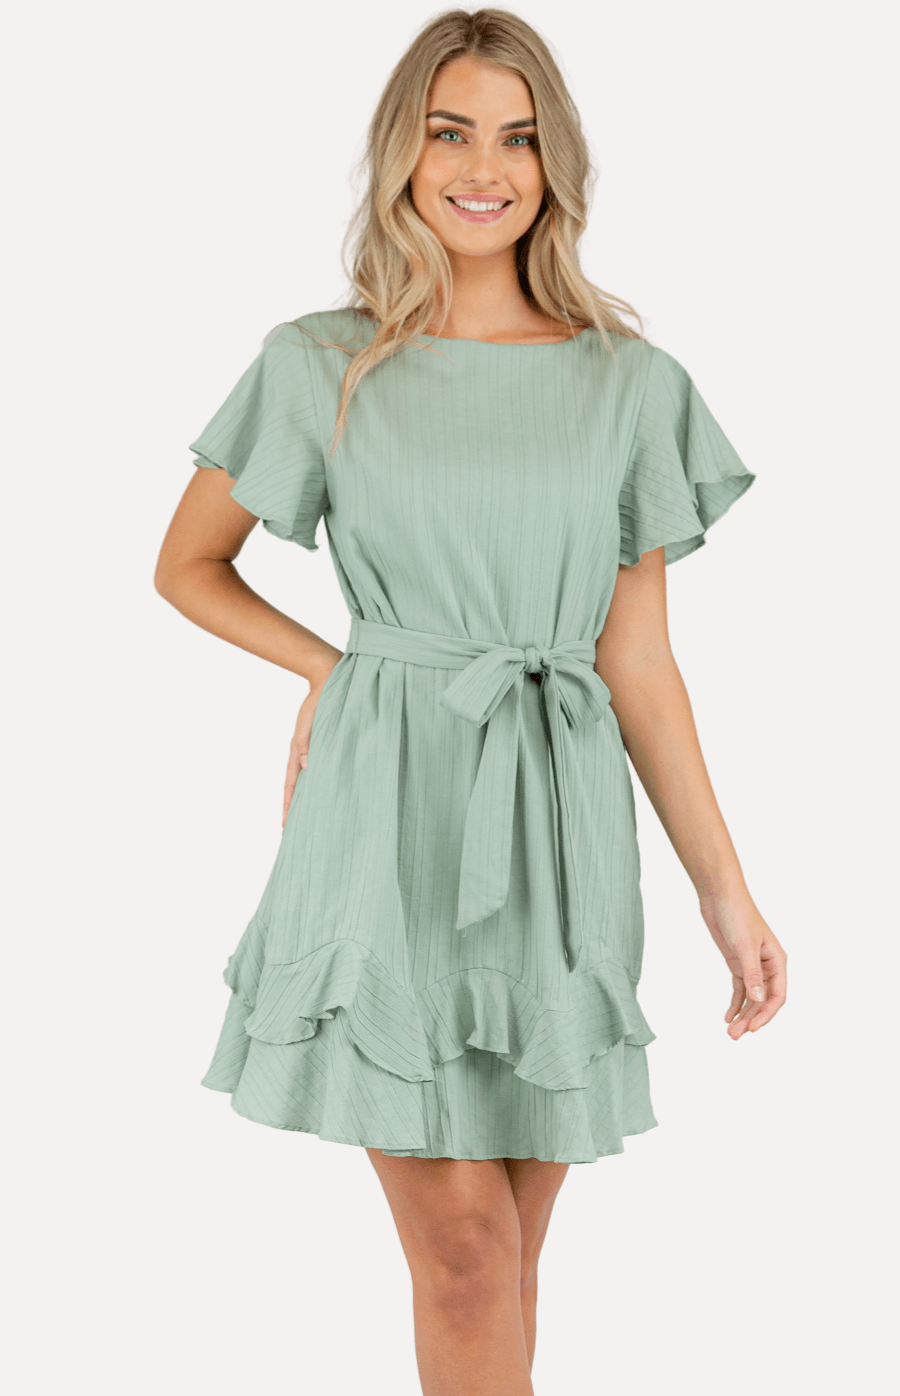 Evee Mini Dress in Mint - Ophelia Fox Boutique